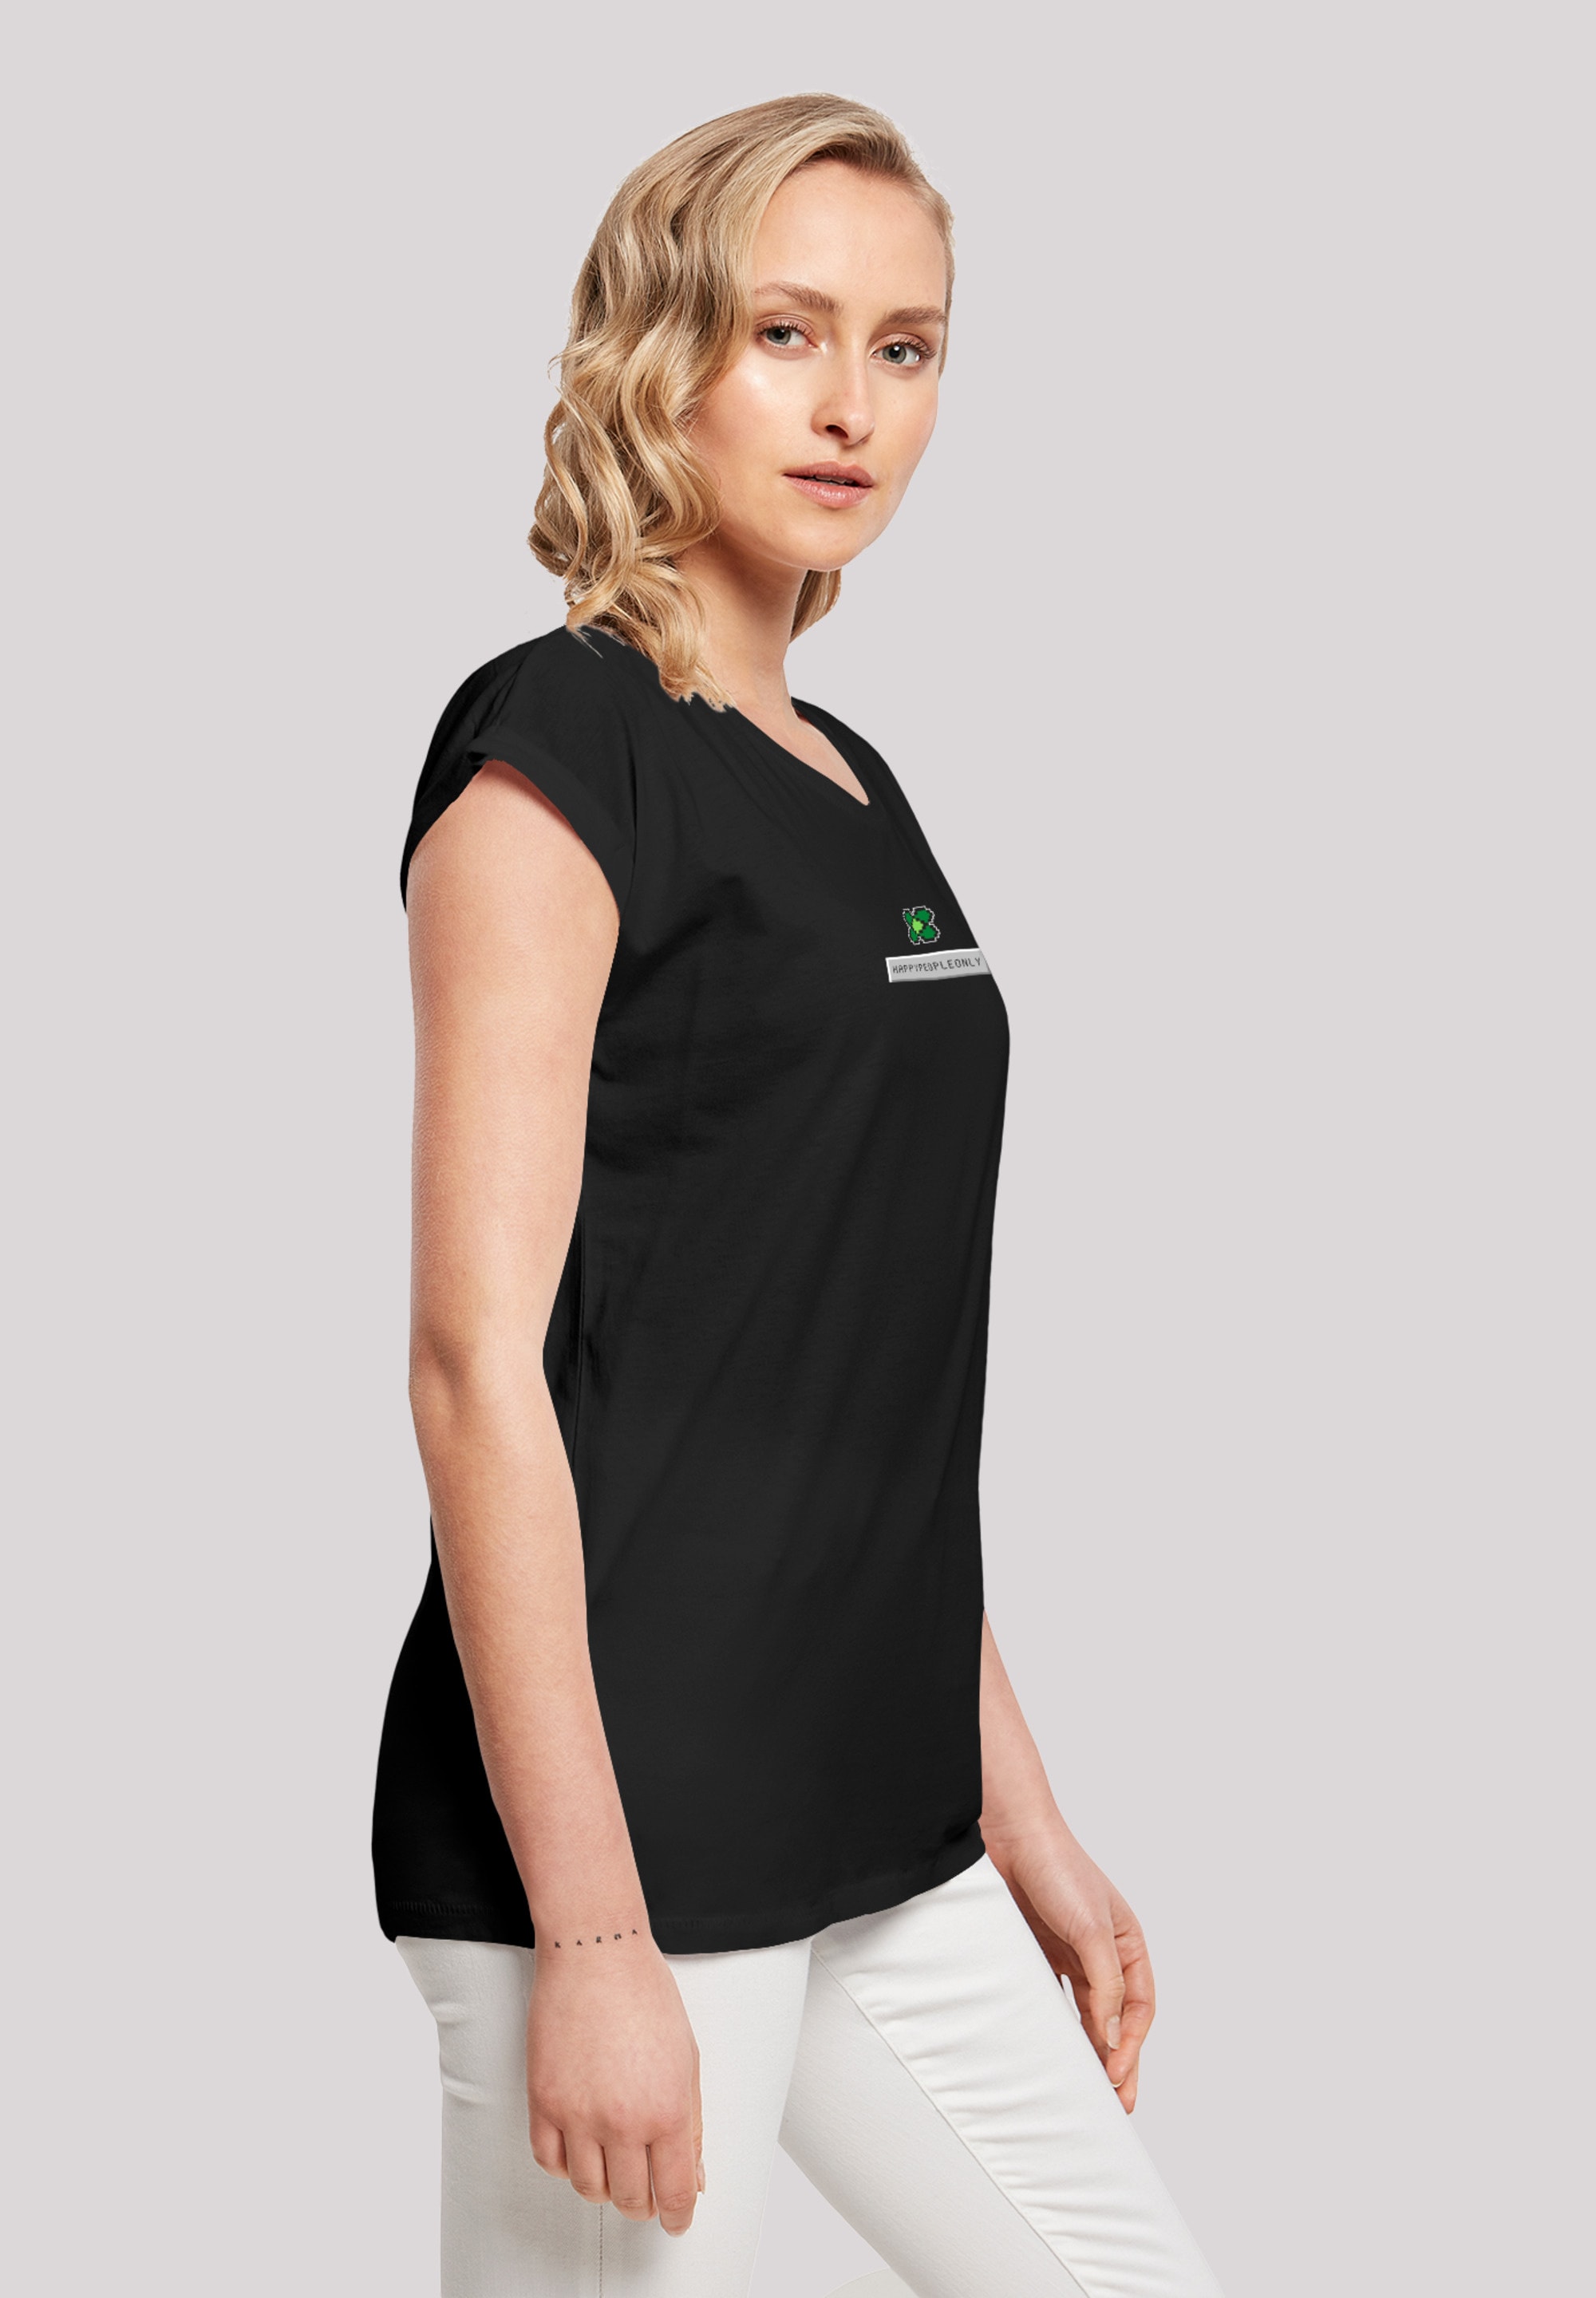 | Pixel walking shoppen New Print Kleeblatt«, Year »Silvester Happy I\'m F4NT4STIC T-Shirt